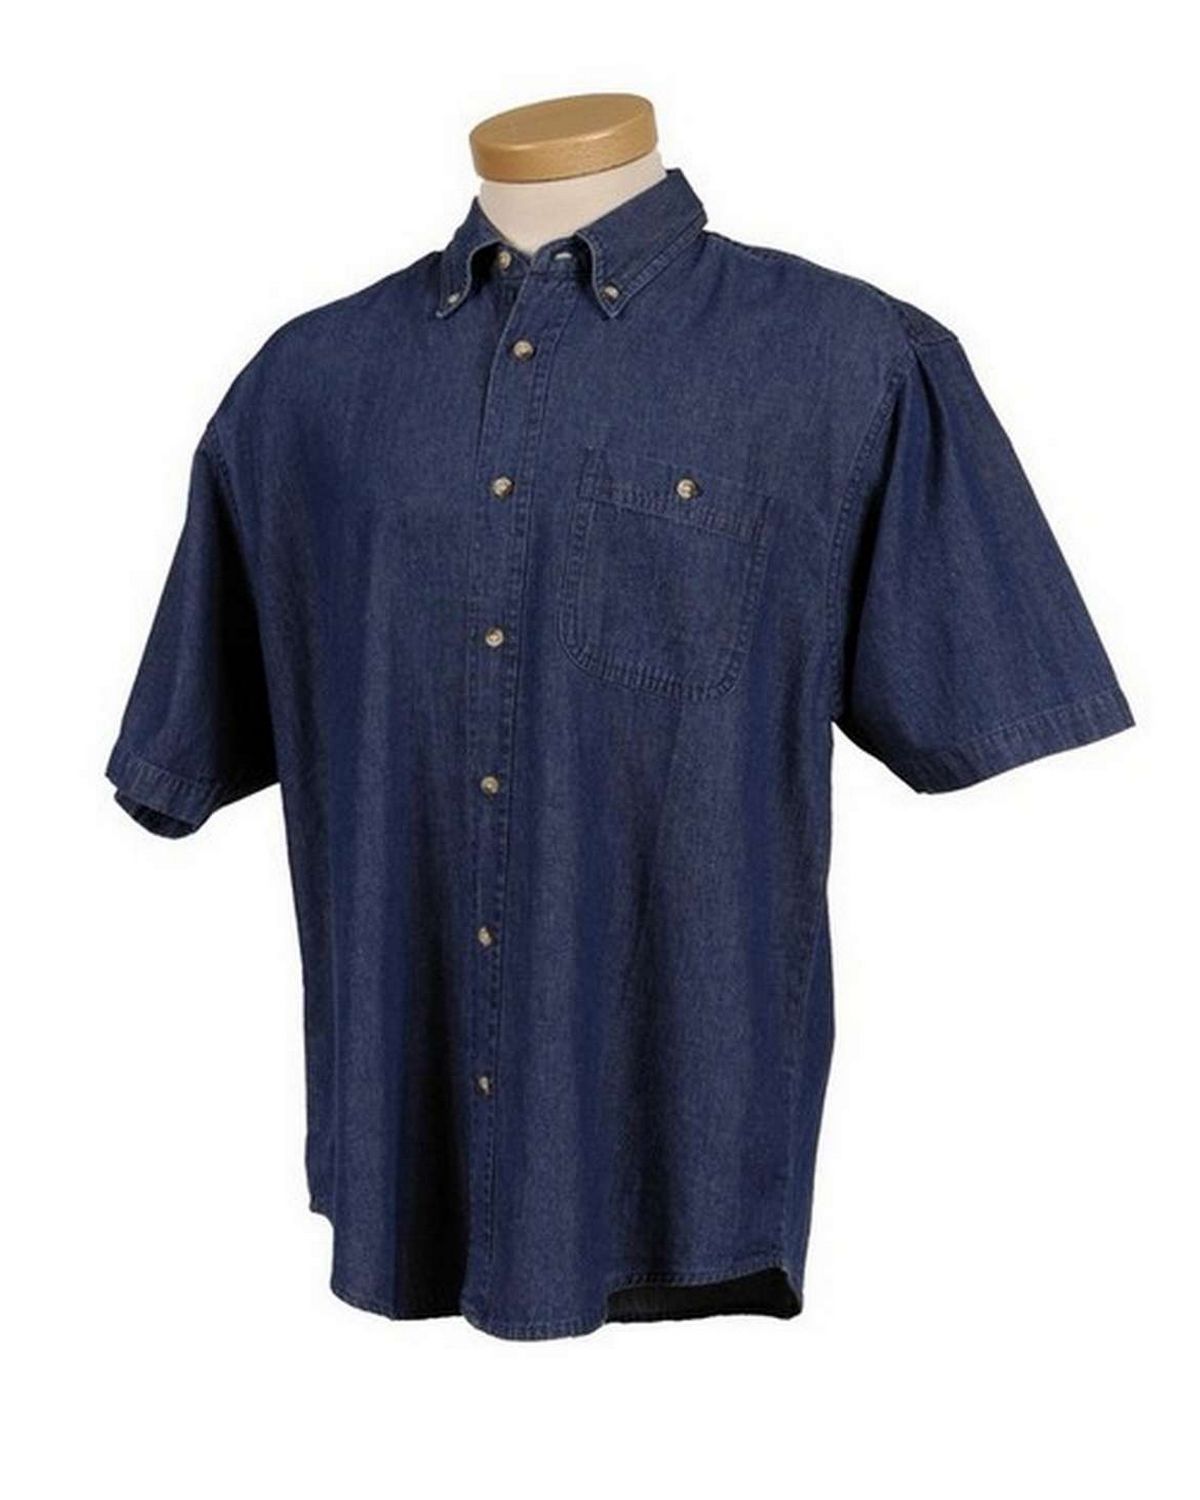 Tri-Mountain 828 Men's denim short sleeve shirt